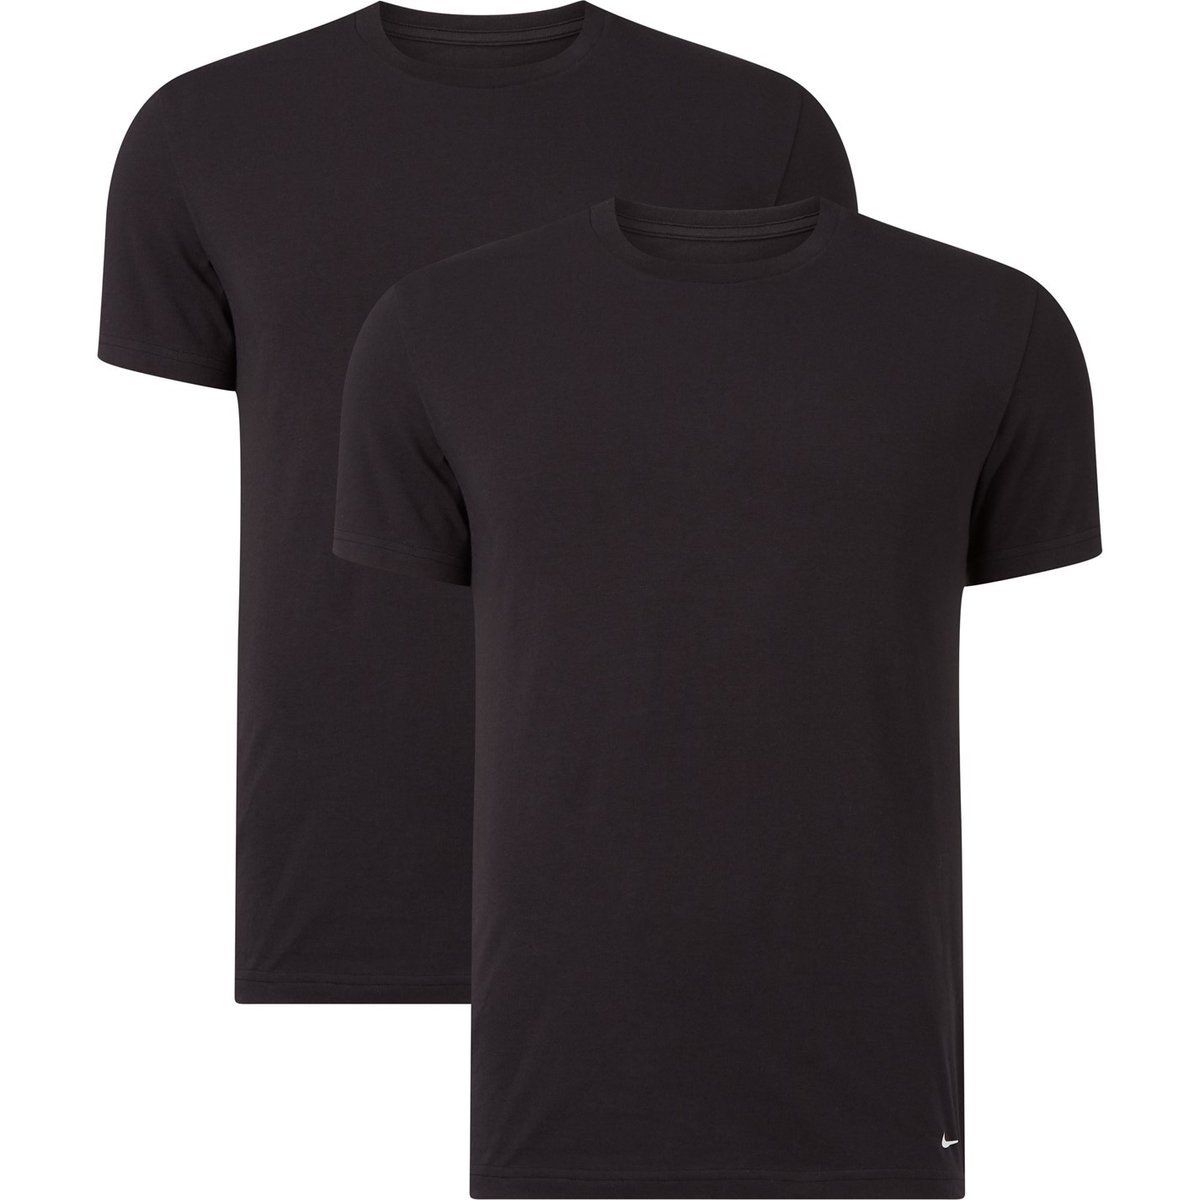 Under Armour Men's Tottenham Hotspur 14/15 Away Replica Short Sleeve Shirt  Small Black : : Sports, Fitness & Outdoors